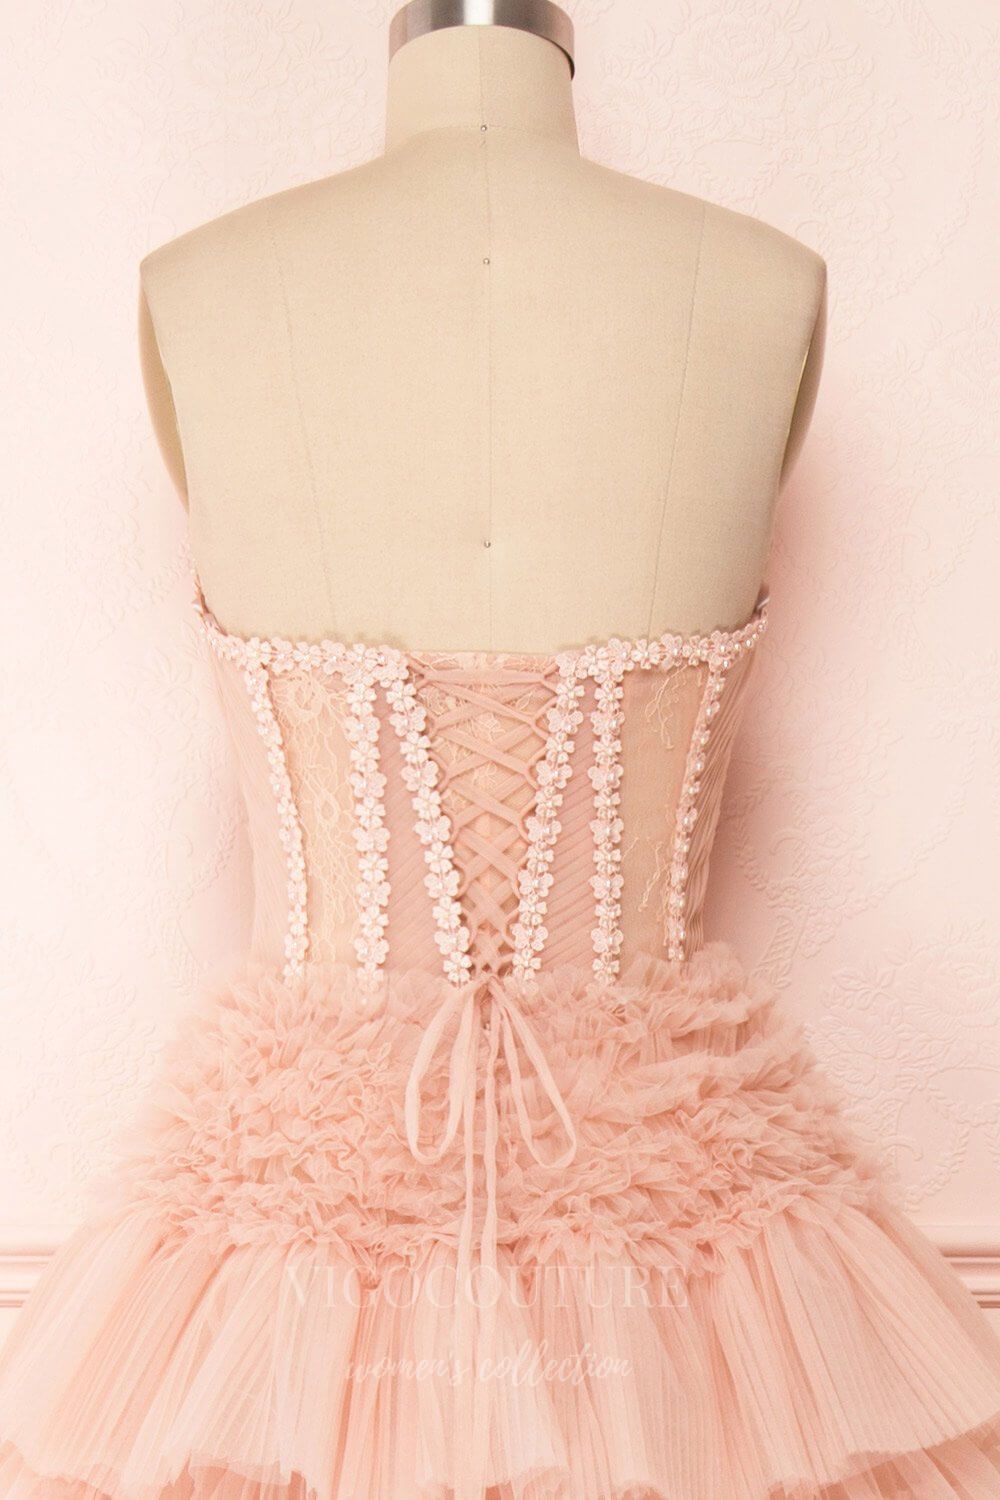 vigocouture-Pink Strapless Tiered Prom Dress 20585-Prom Dresses-vigocouture-